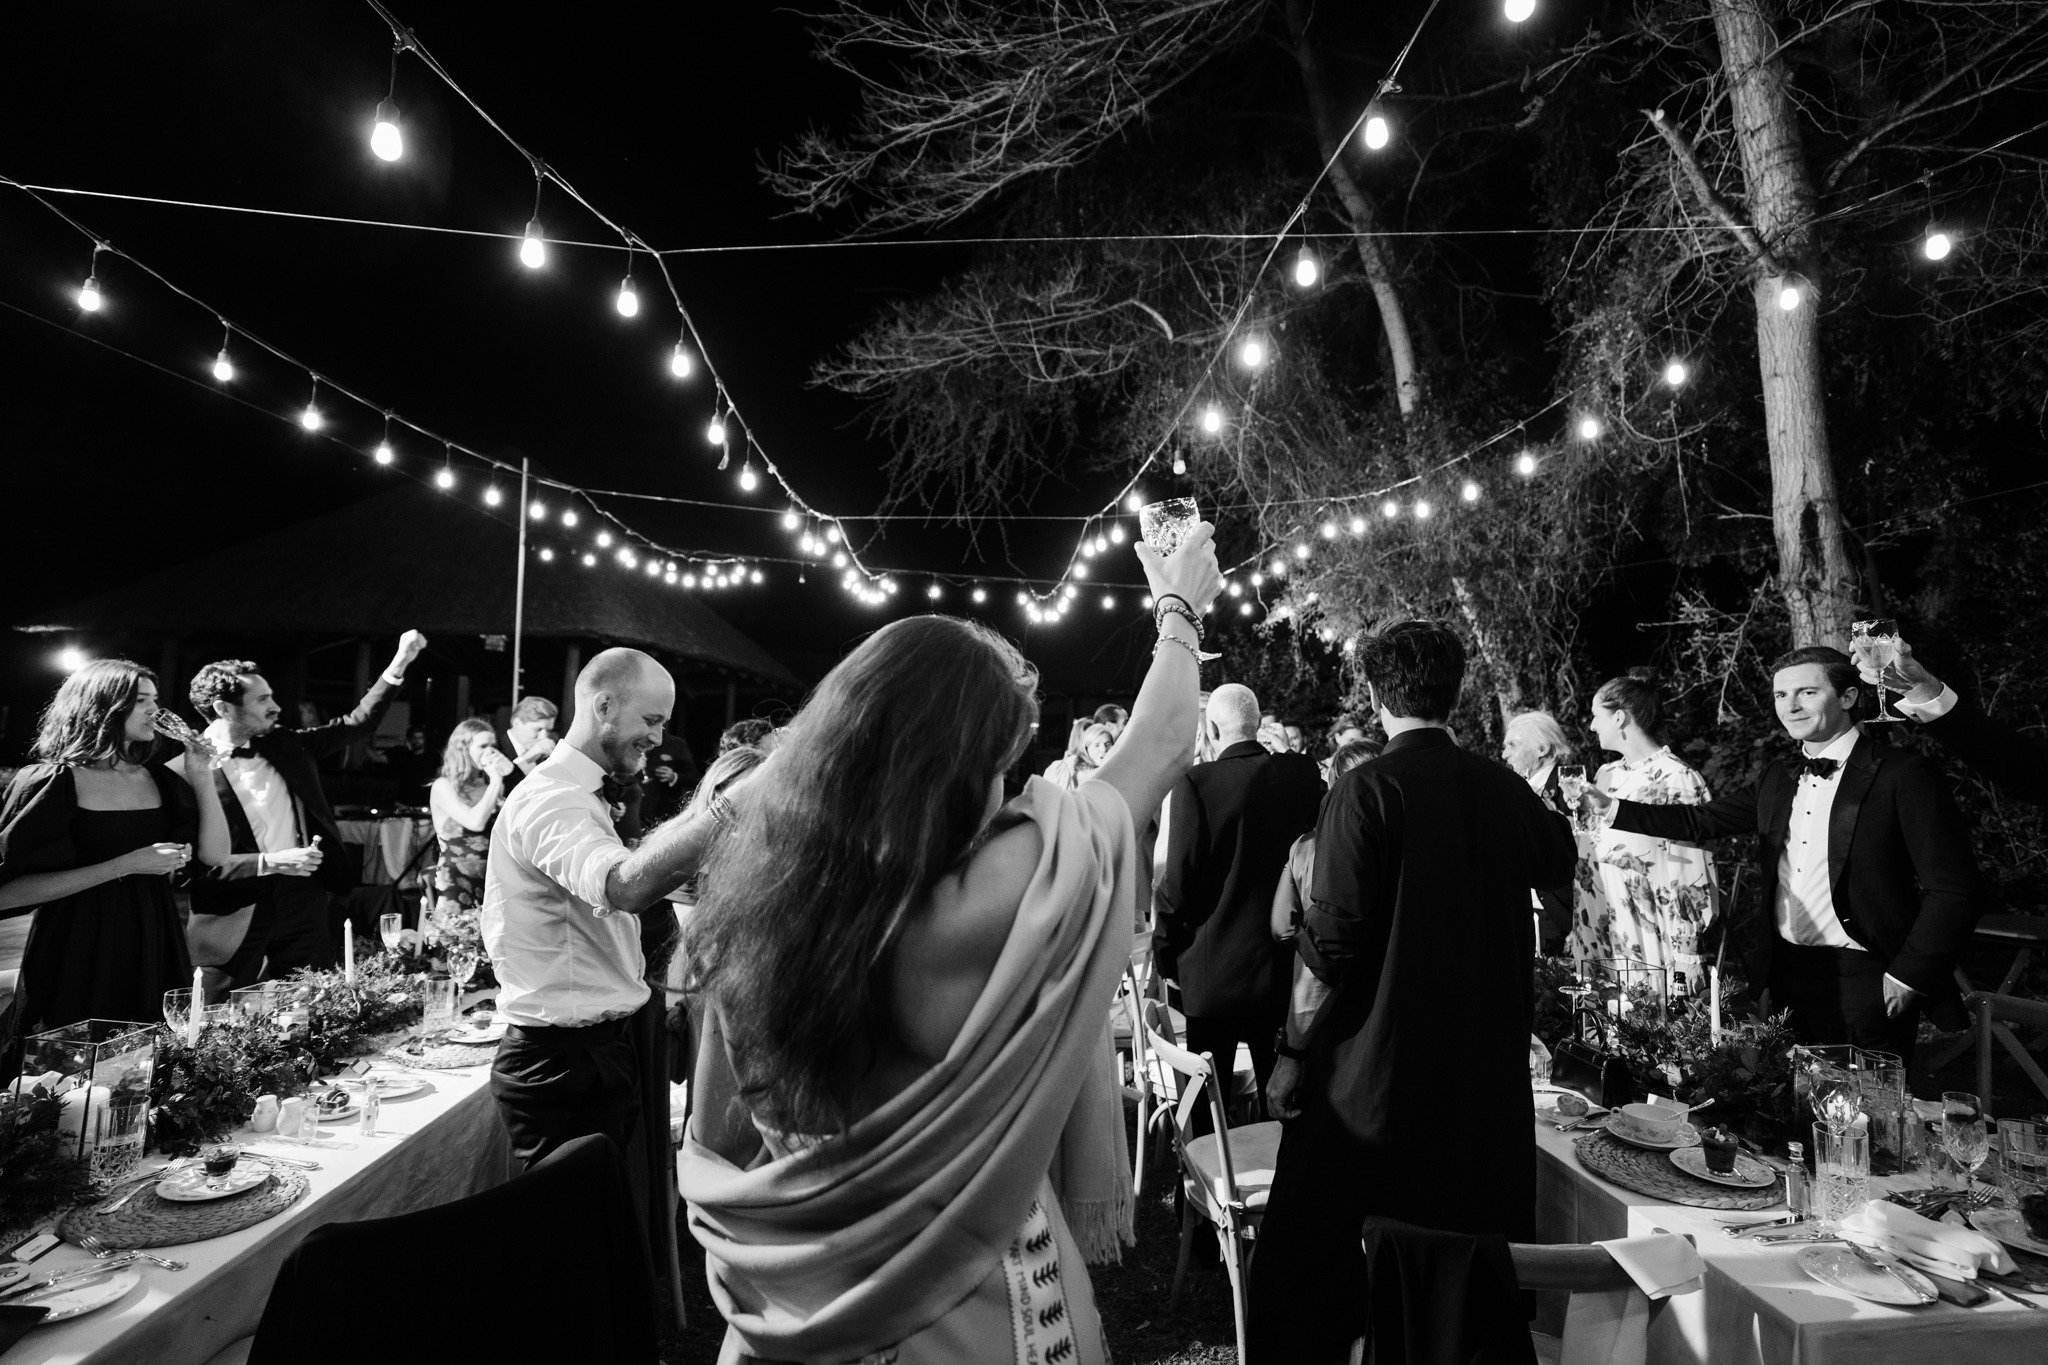 A//K - cheers! 

#cheka #mrandmrs  #weddingblog #sonyalpha #alphacollectives #destinationwedding #weddinginspo #fearlessphotographer #bestkenyanweddingphotographer #destinationweddingphotographer  #weddingsutra #radlovestories #firstandlasts #wedphot